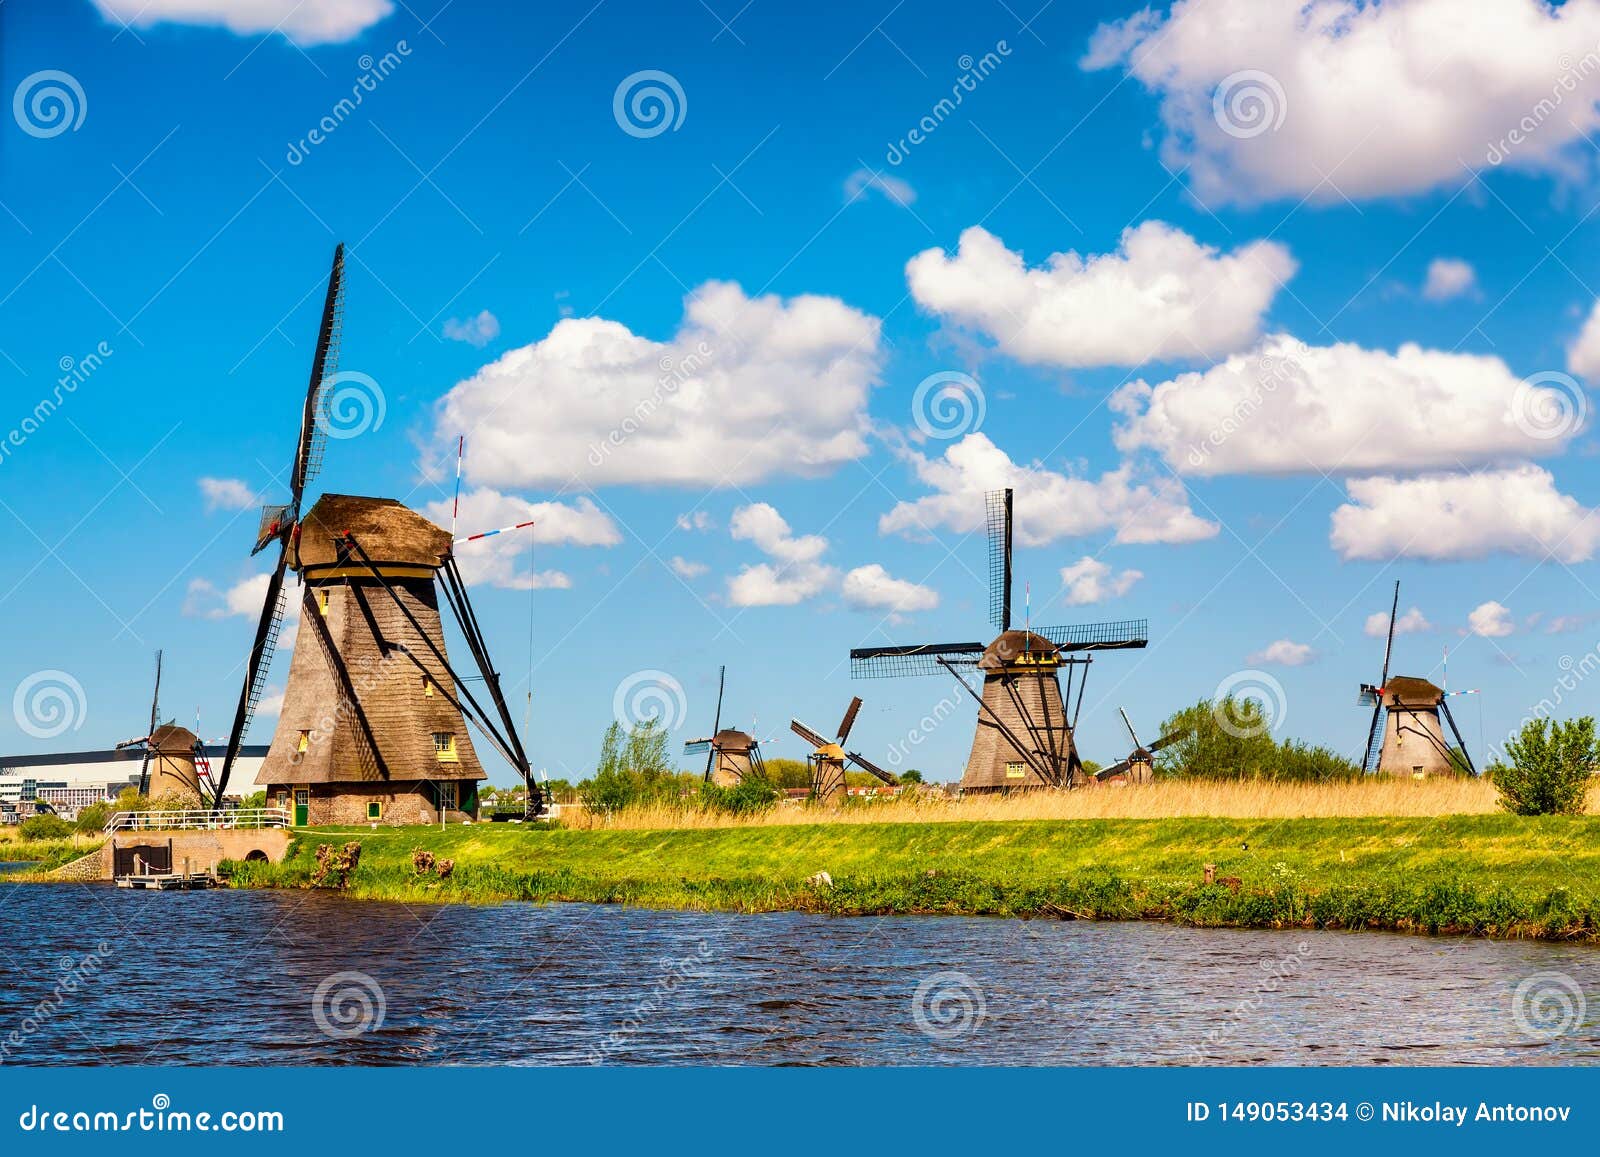 famous windmills in kinderdijk village in holland. colorful spring rural landscape in netherlands, europe. unesco world heritage